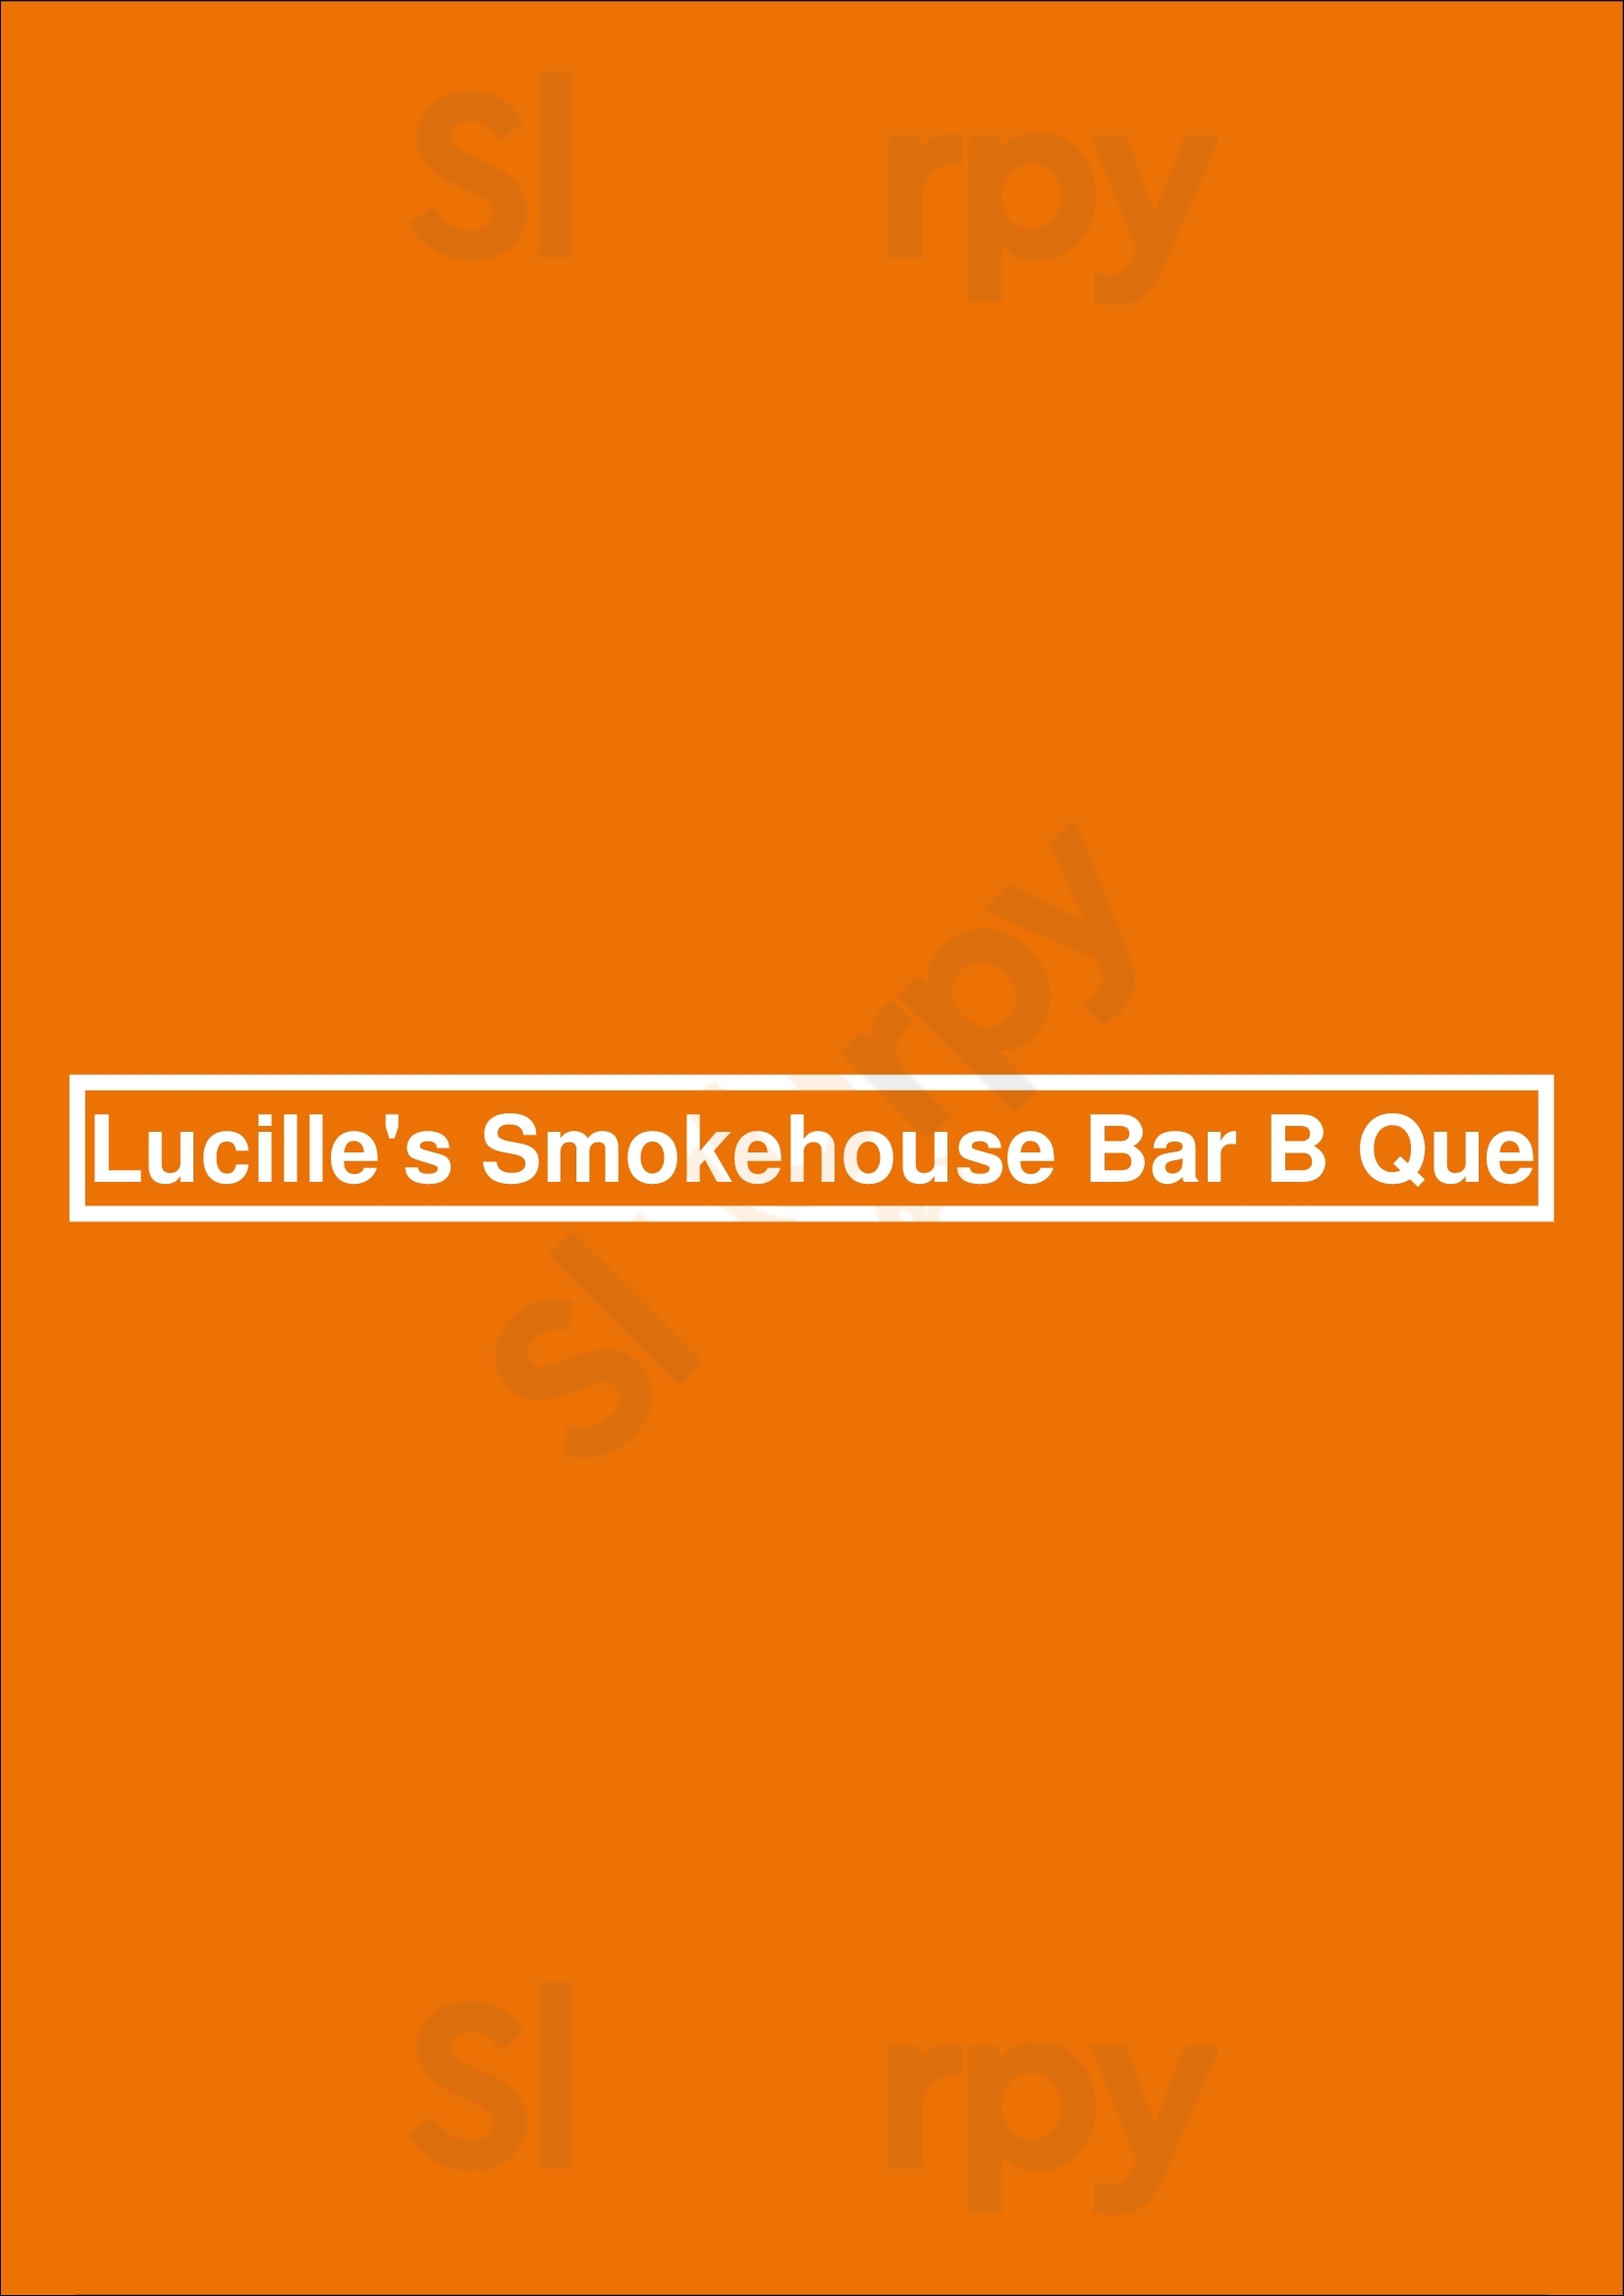 Lucille's Smokehouse Bar B Que Long Beach Menu - 1